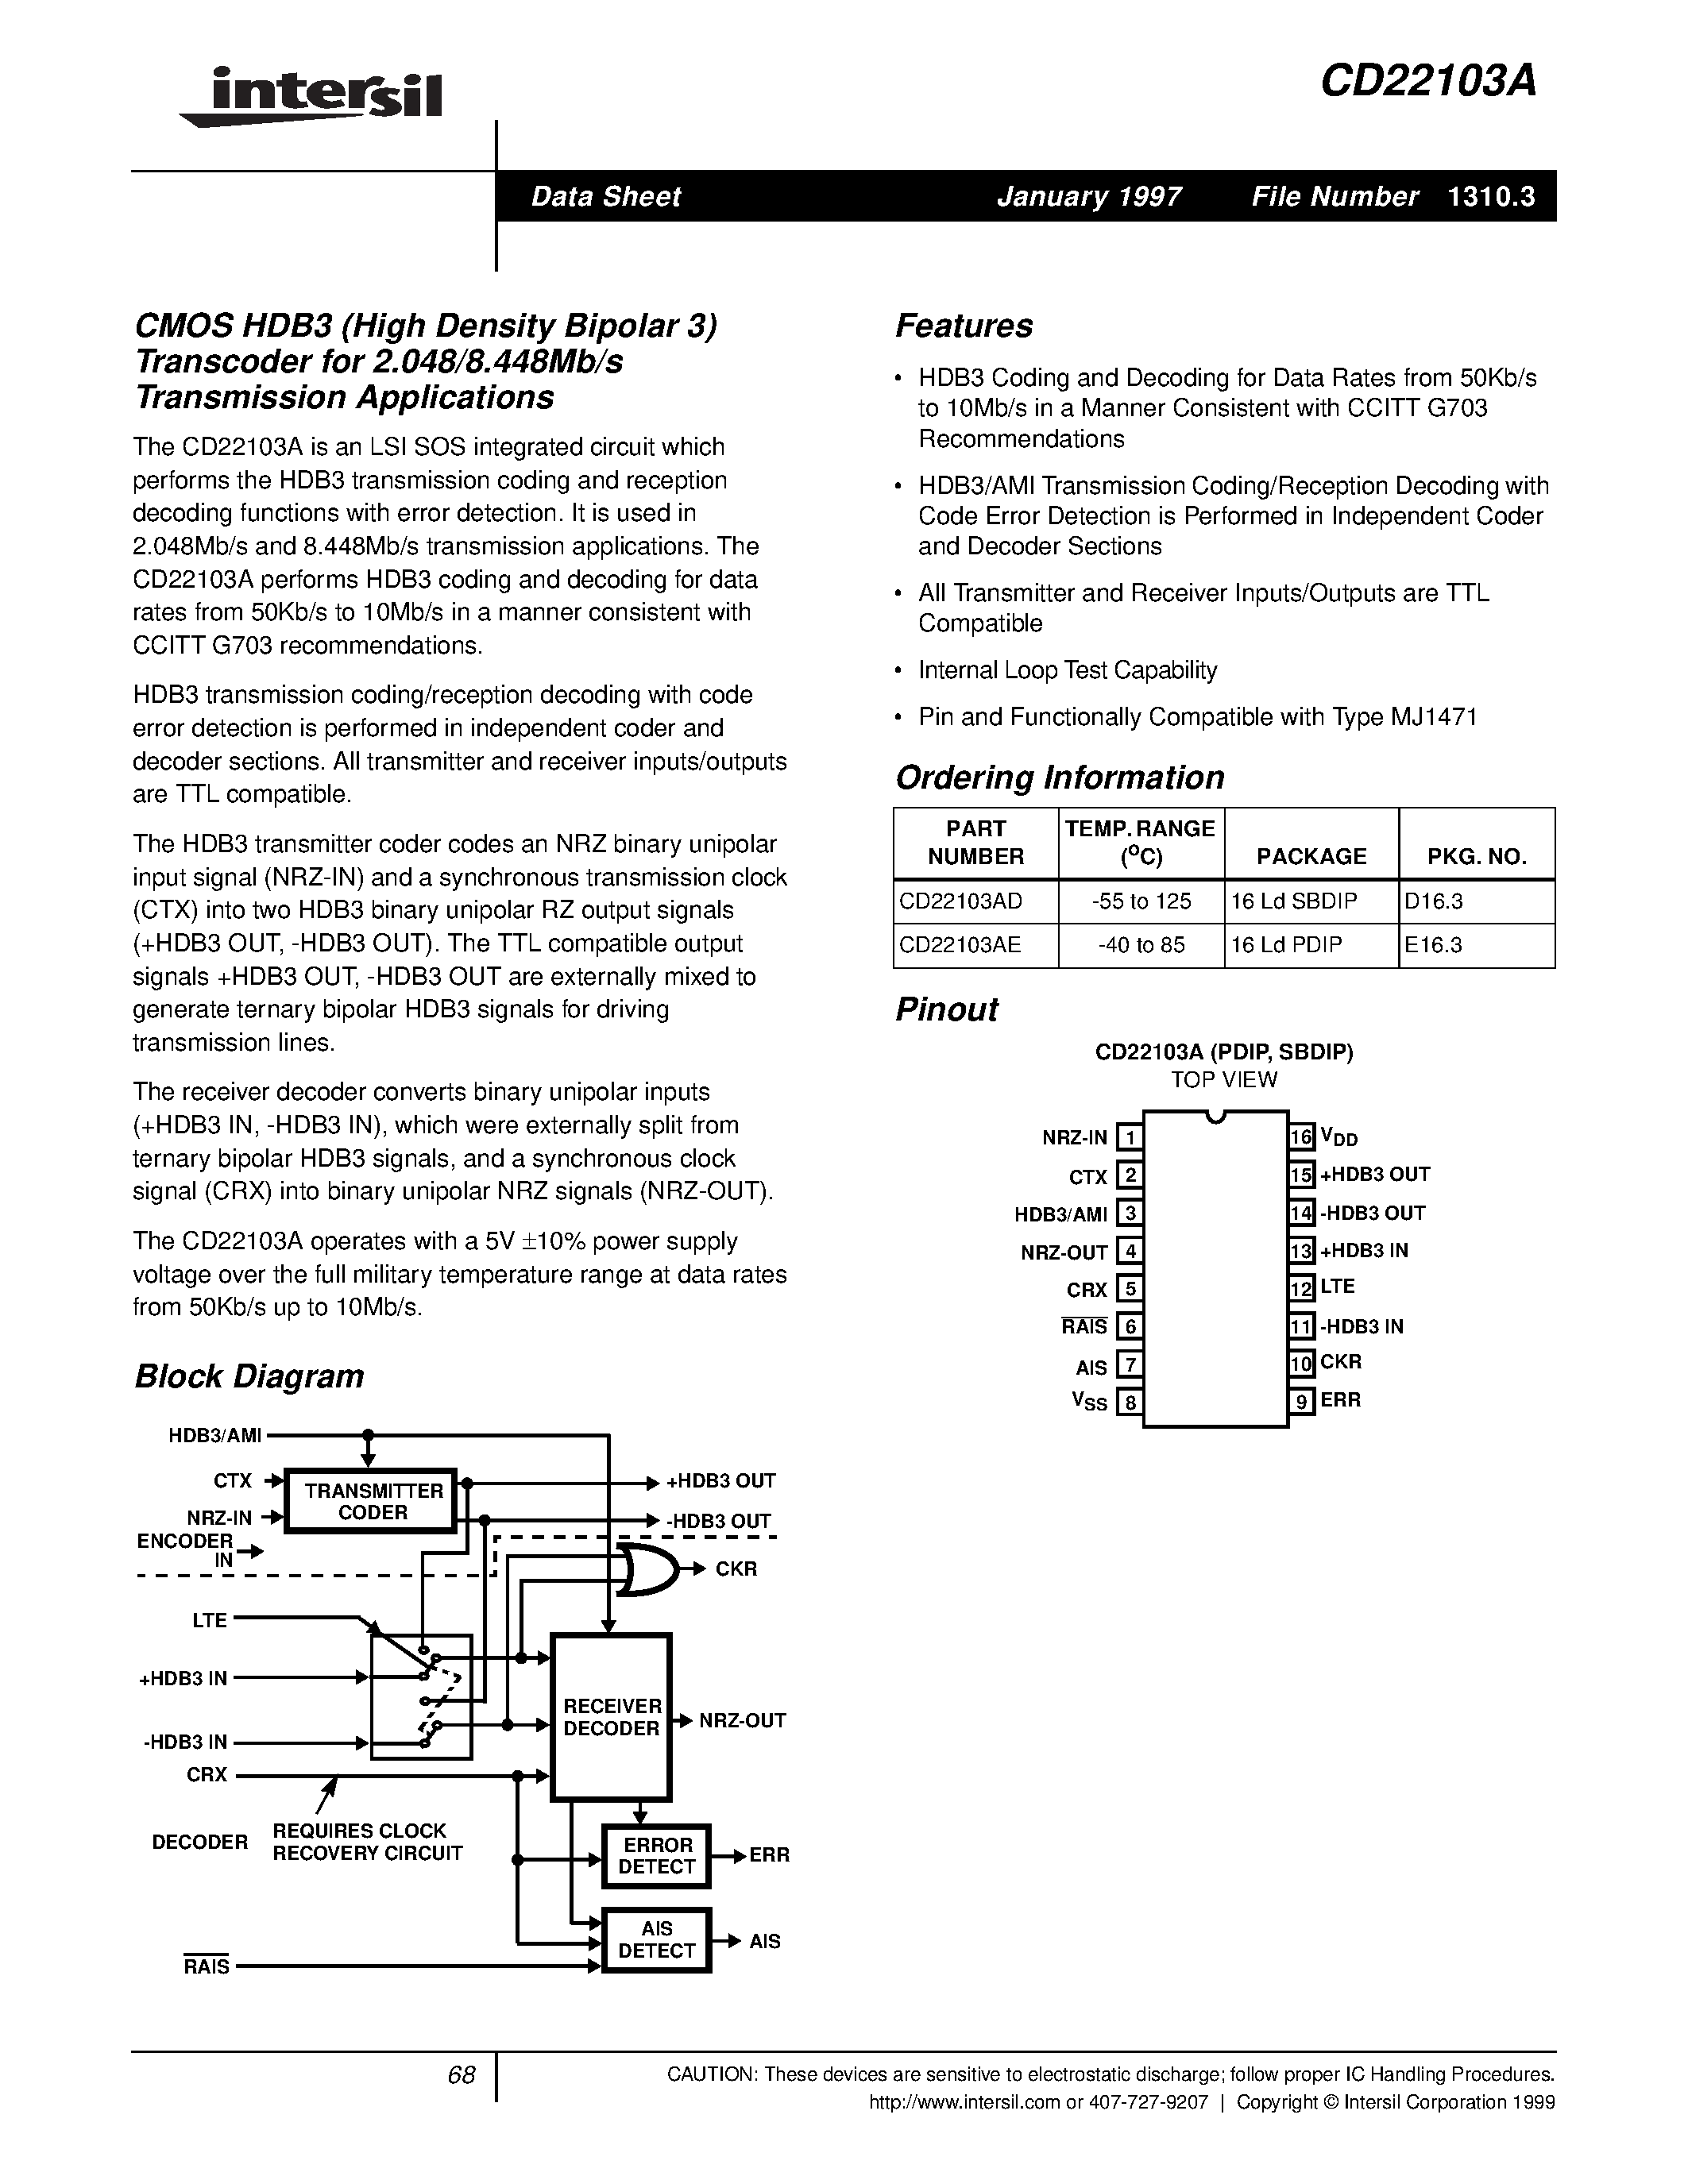 Datasheet CD22103AD - CMOS HDB3 High Density Bipolar 3 Transcoder for 2.048/8.448Mb/s Transmission Applications page 1